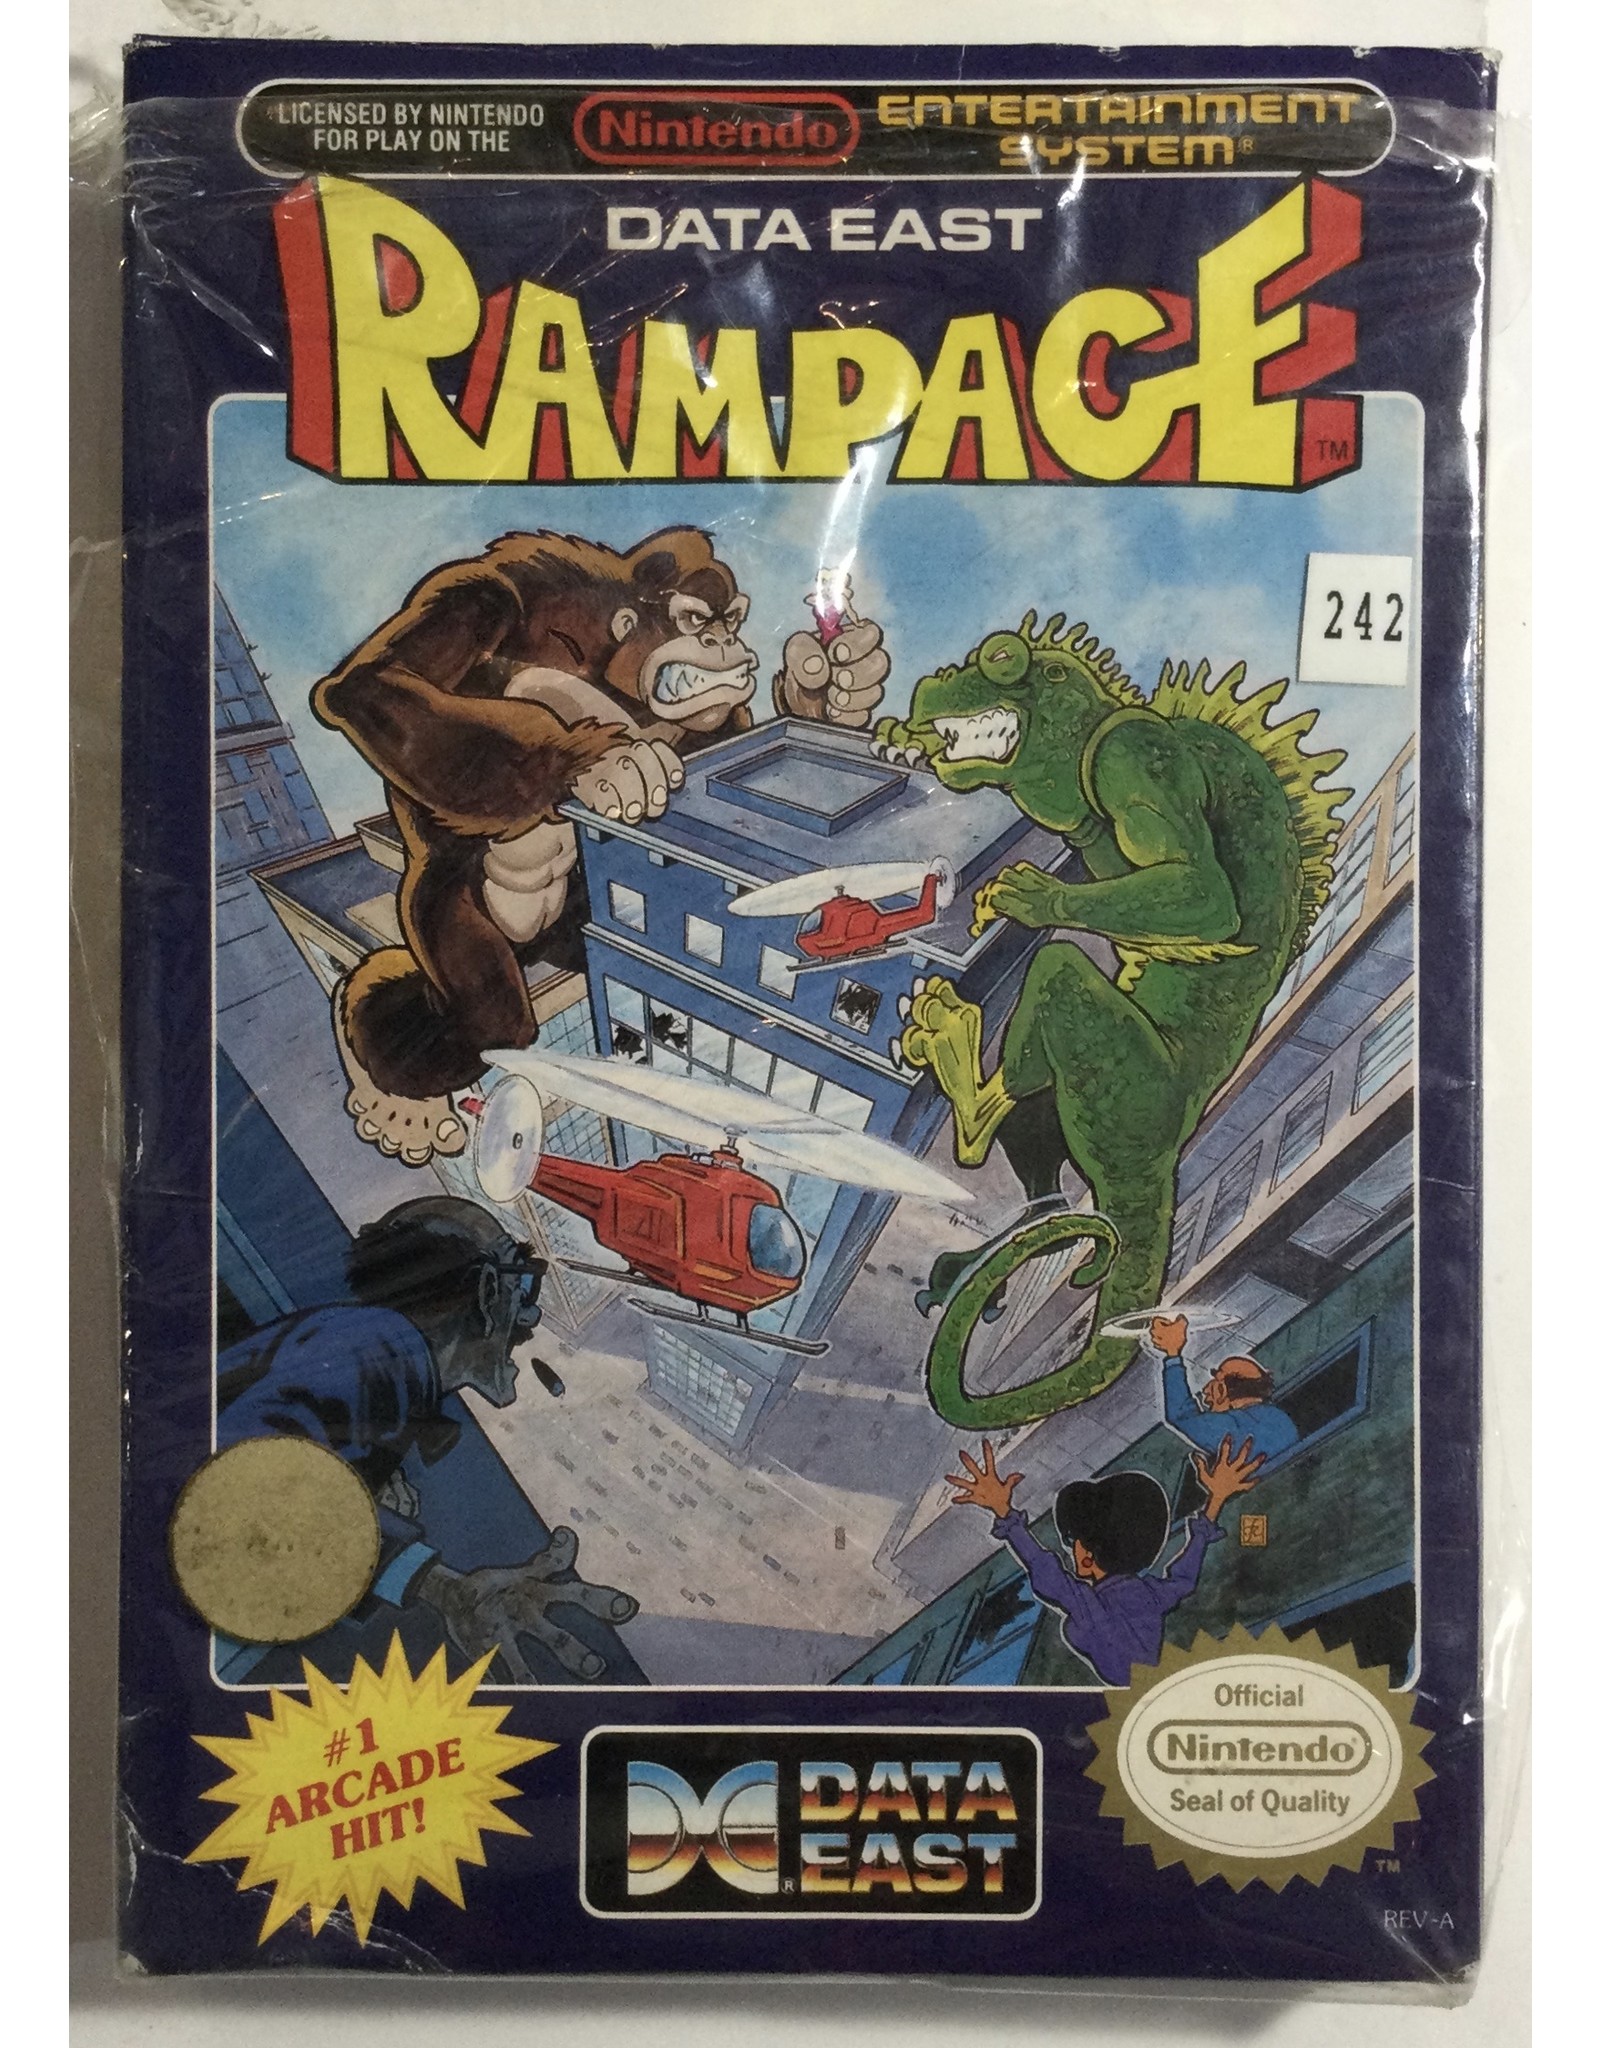 DATA EAST Rampage for Nintendo Entertainment System (NES) - CIB